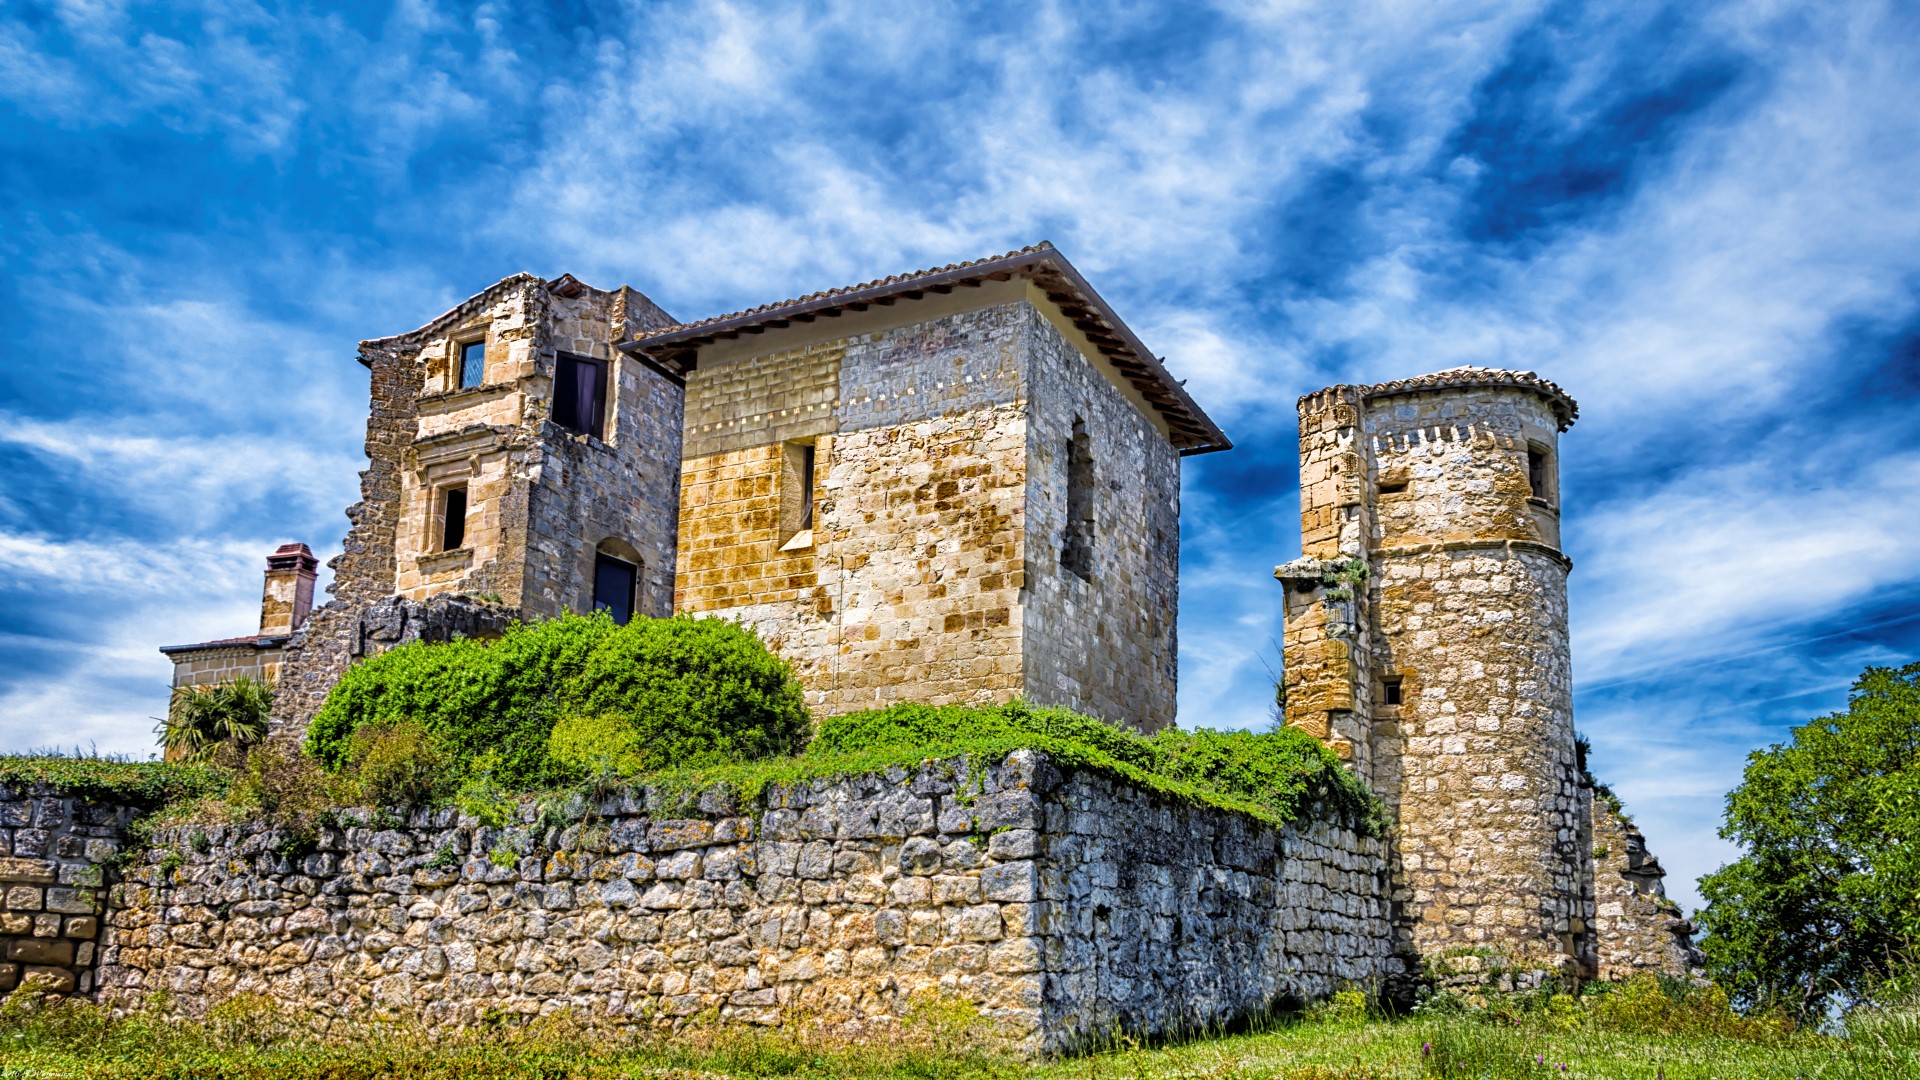 Château de Magrin. Photo Credit: T. Wojtowicz, CC BY-SA 2.0